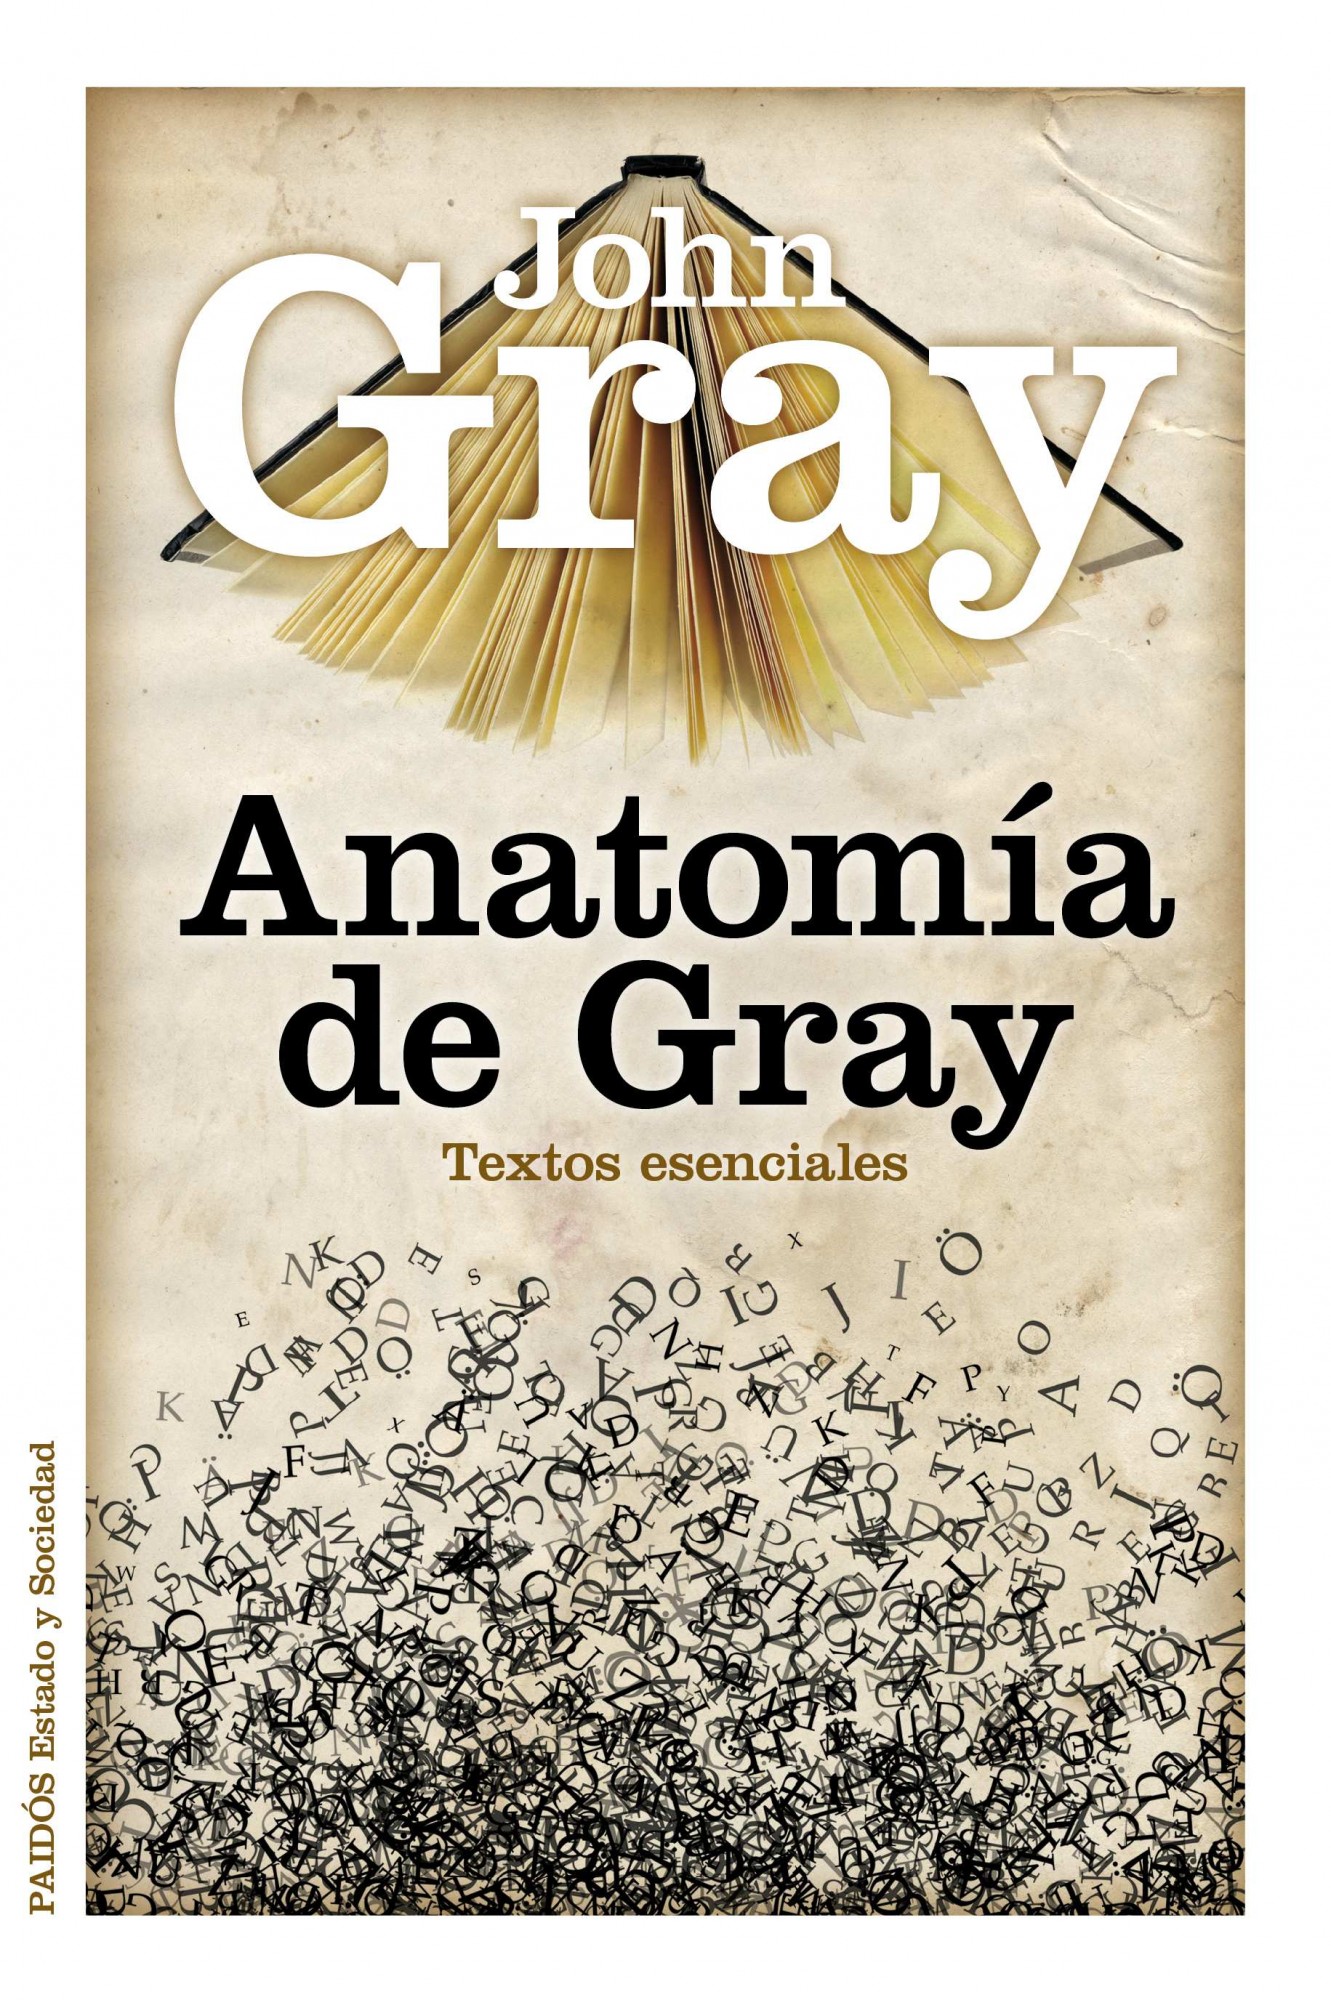 Anatomía de Gray